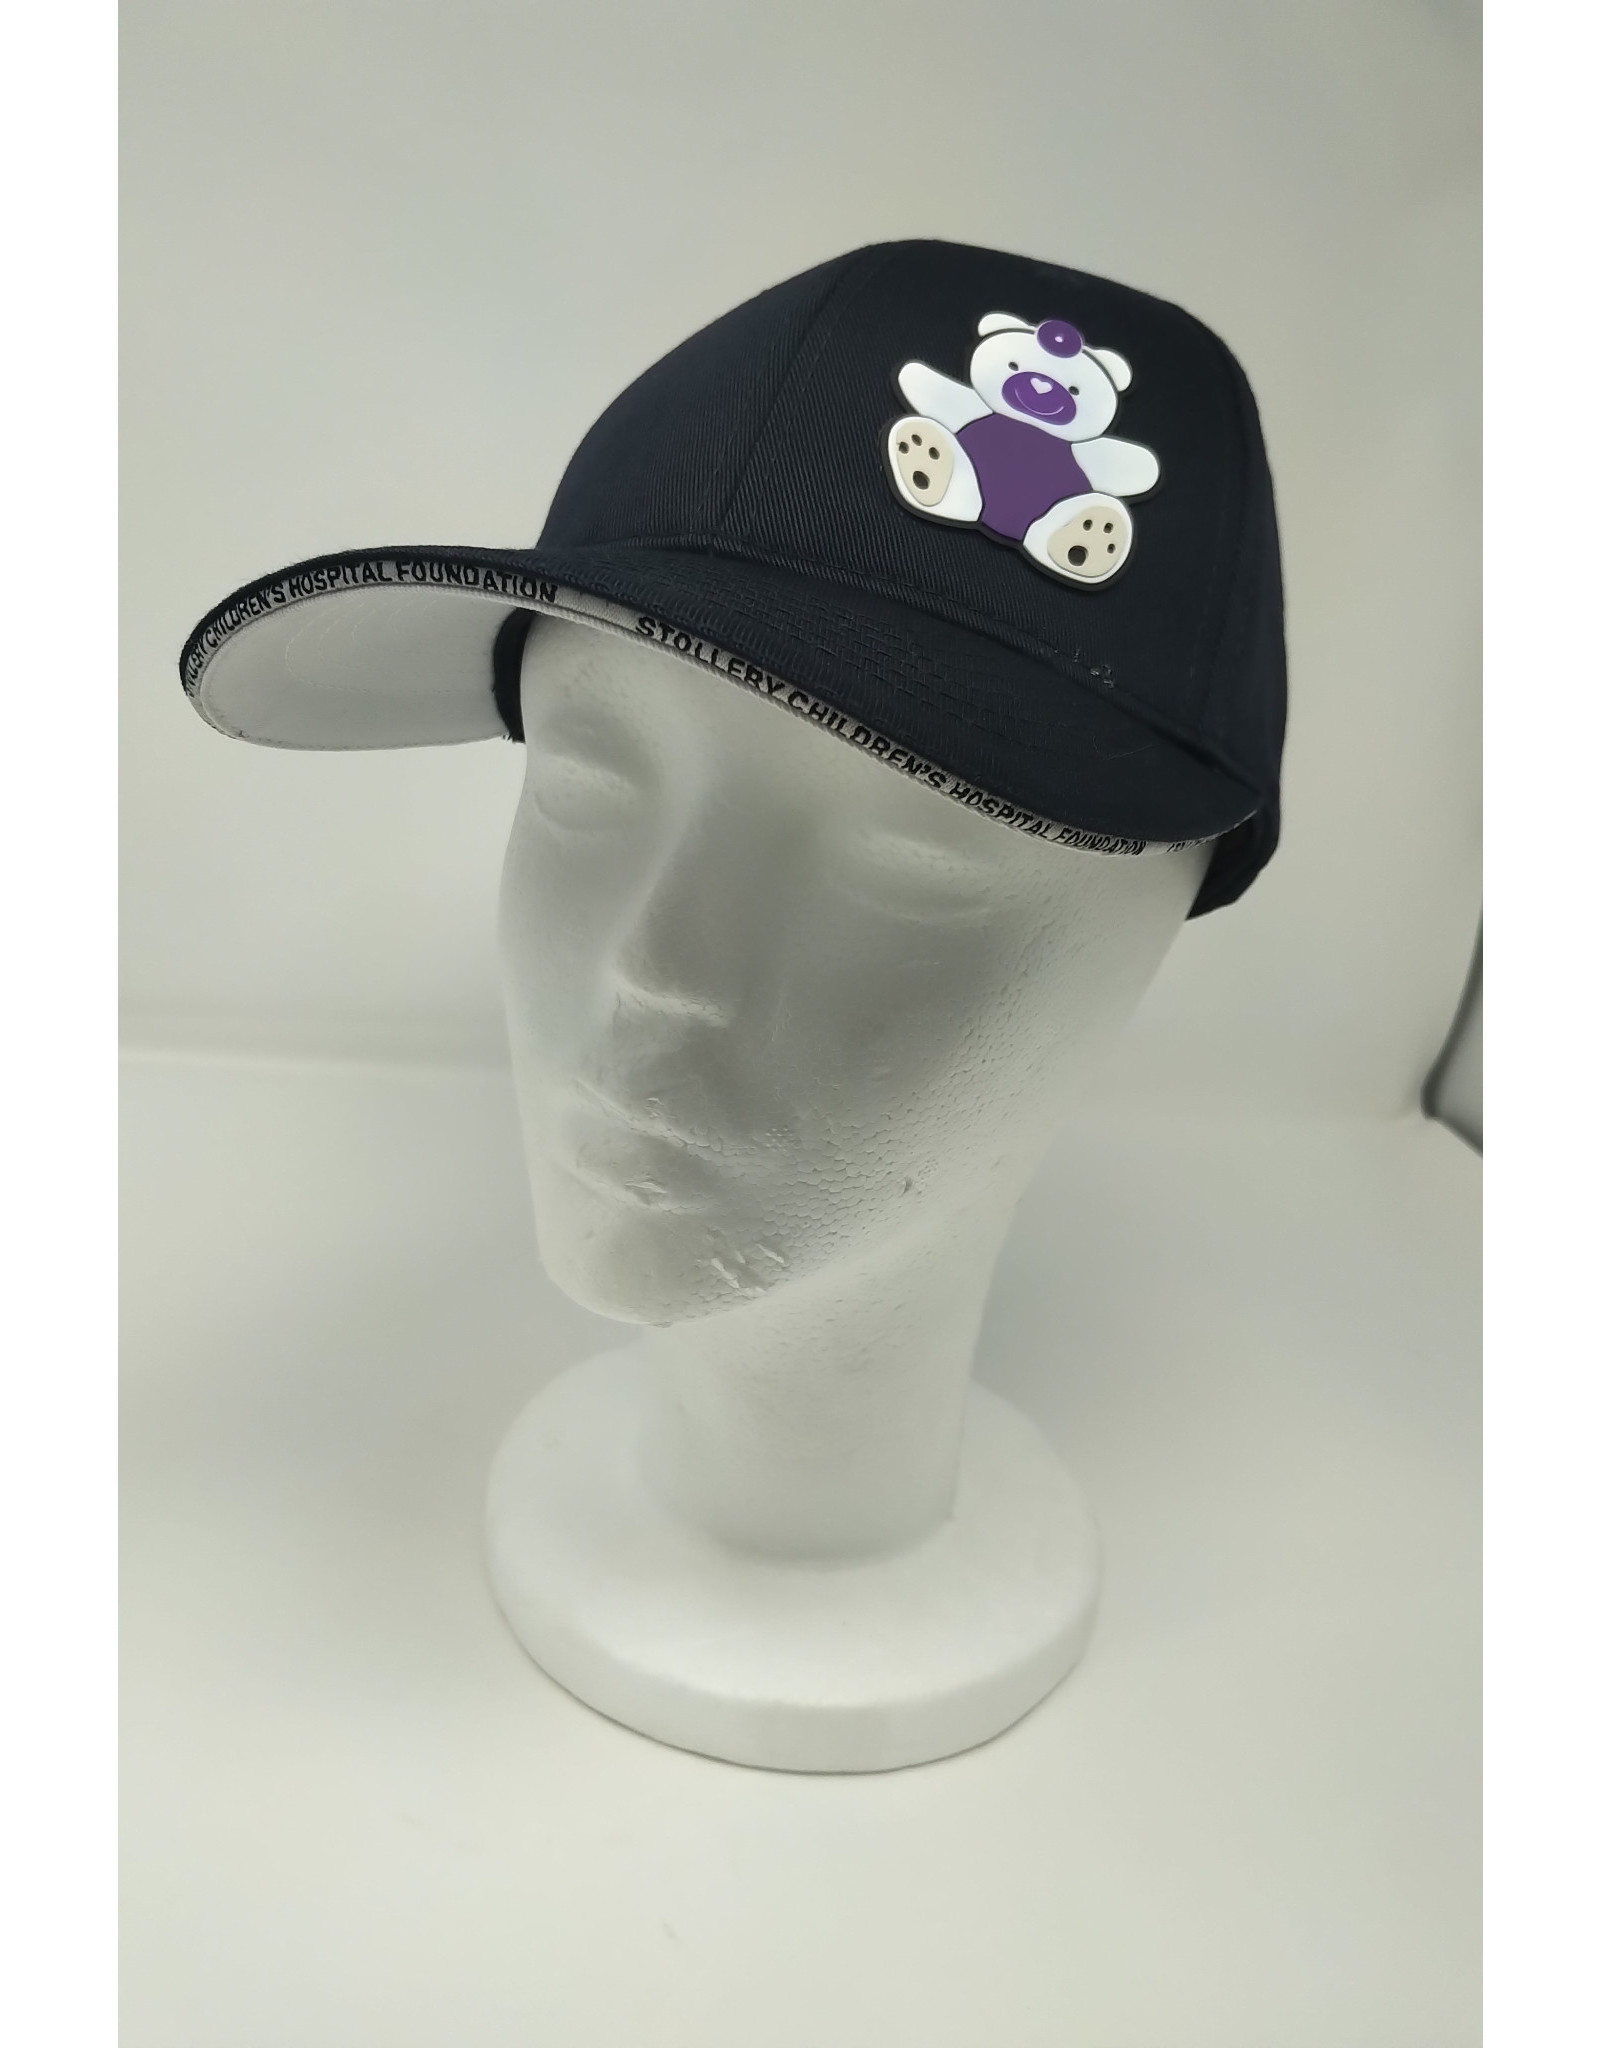 Stollery Adult Hat - purple & white bear